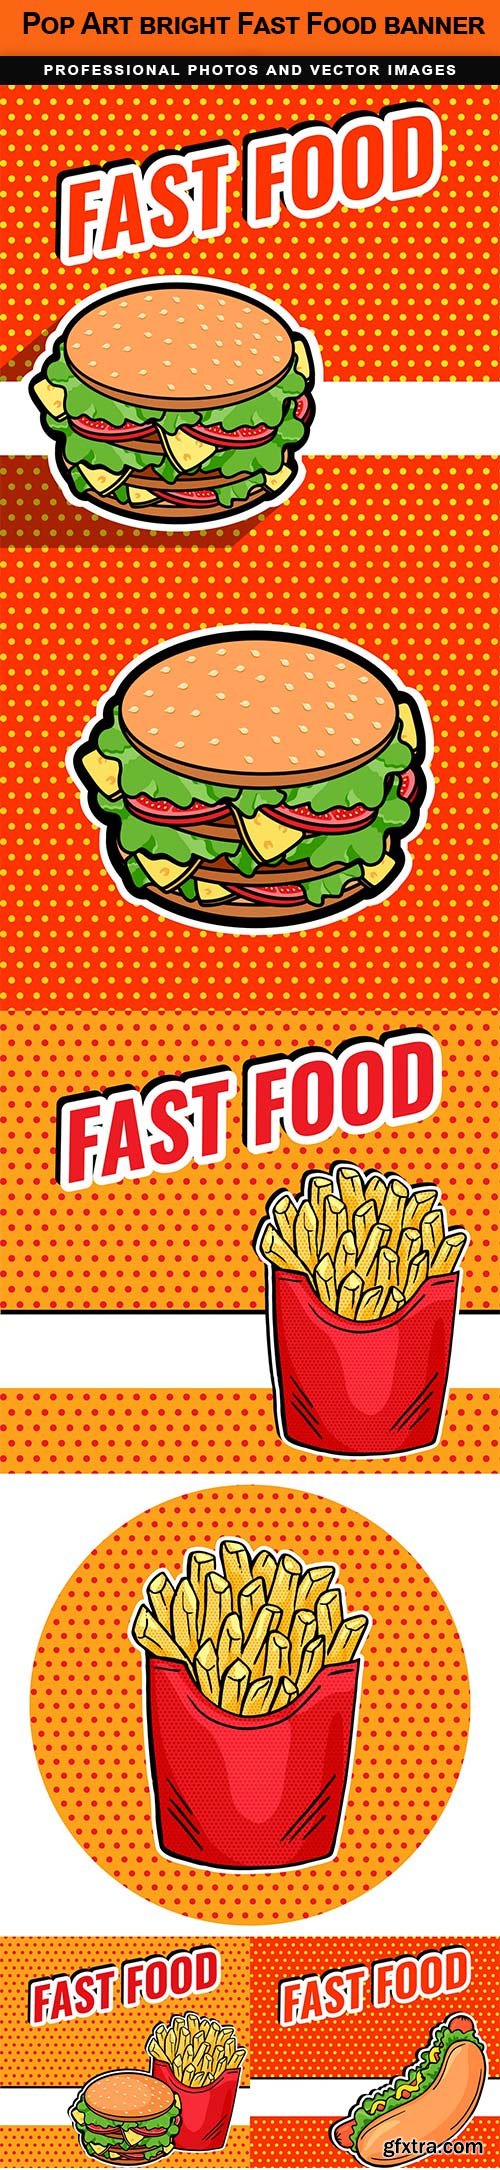 Pop Art bright Fast Food banner